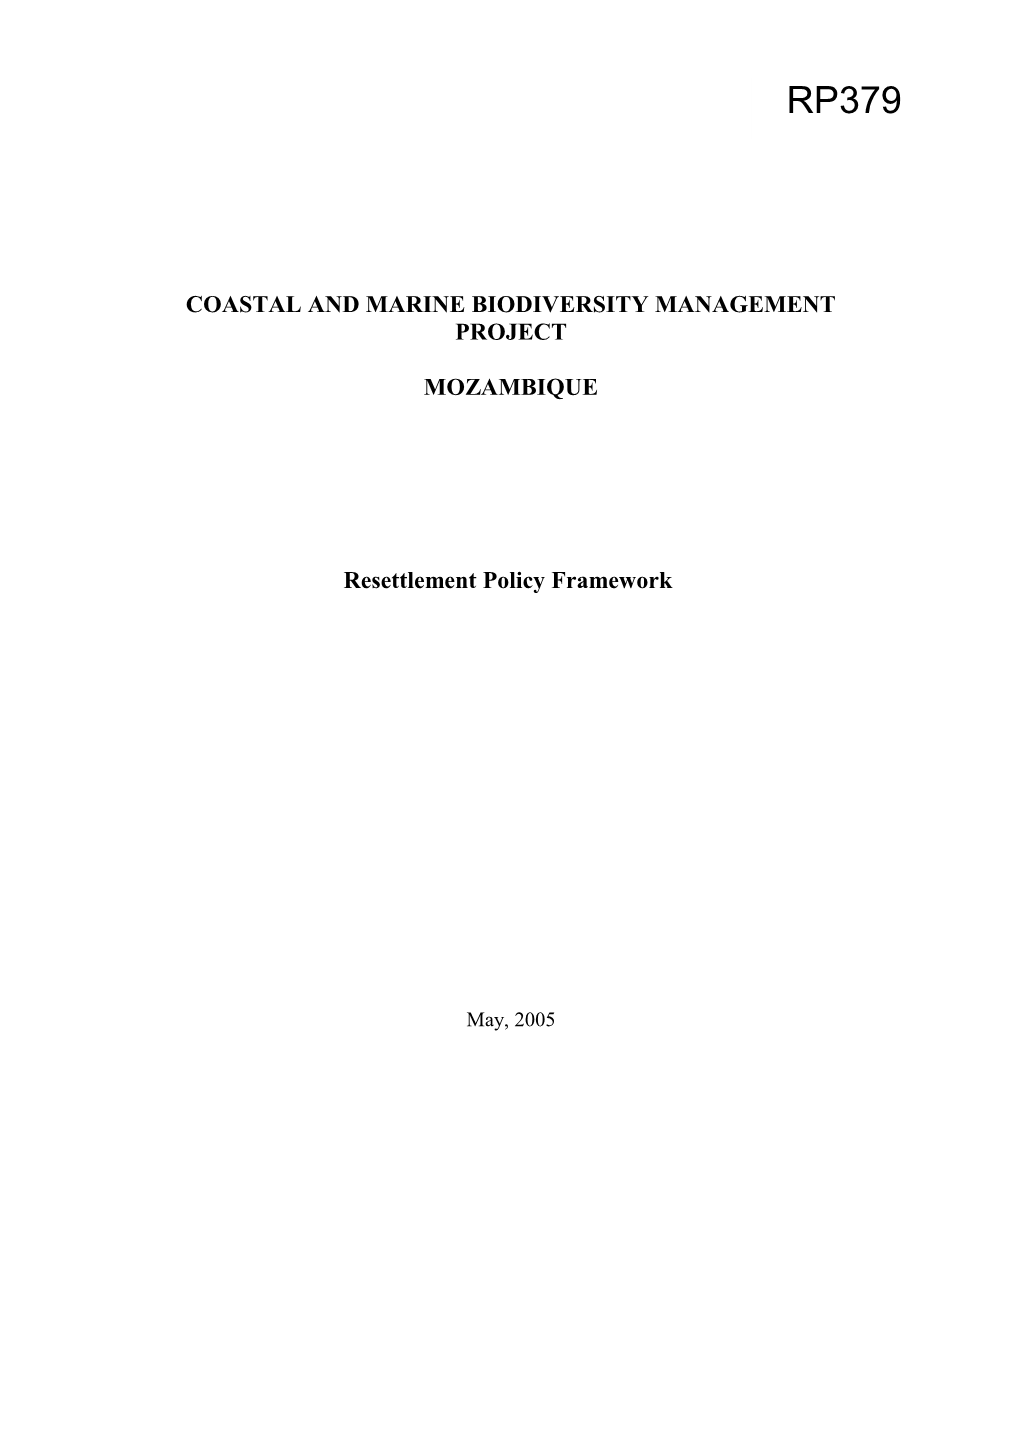 Resettlement Policy Framework CMBMP